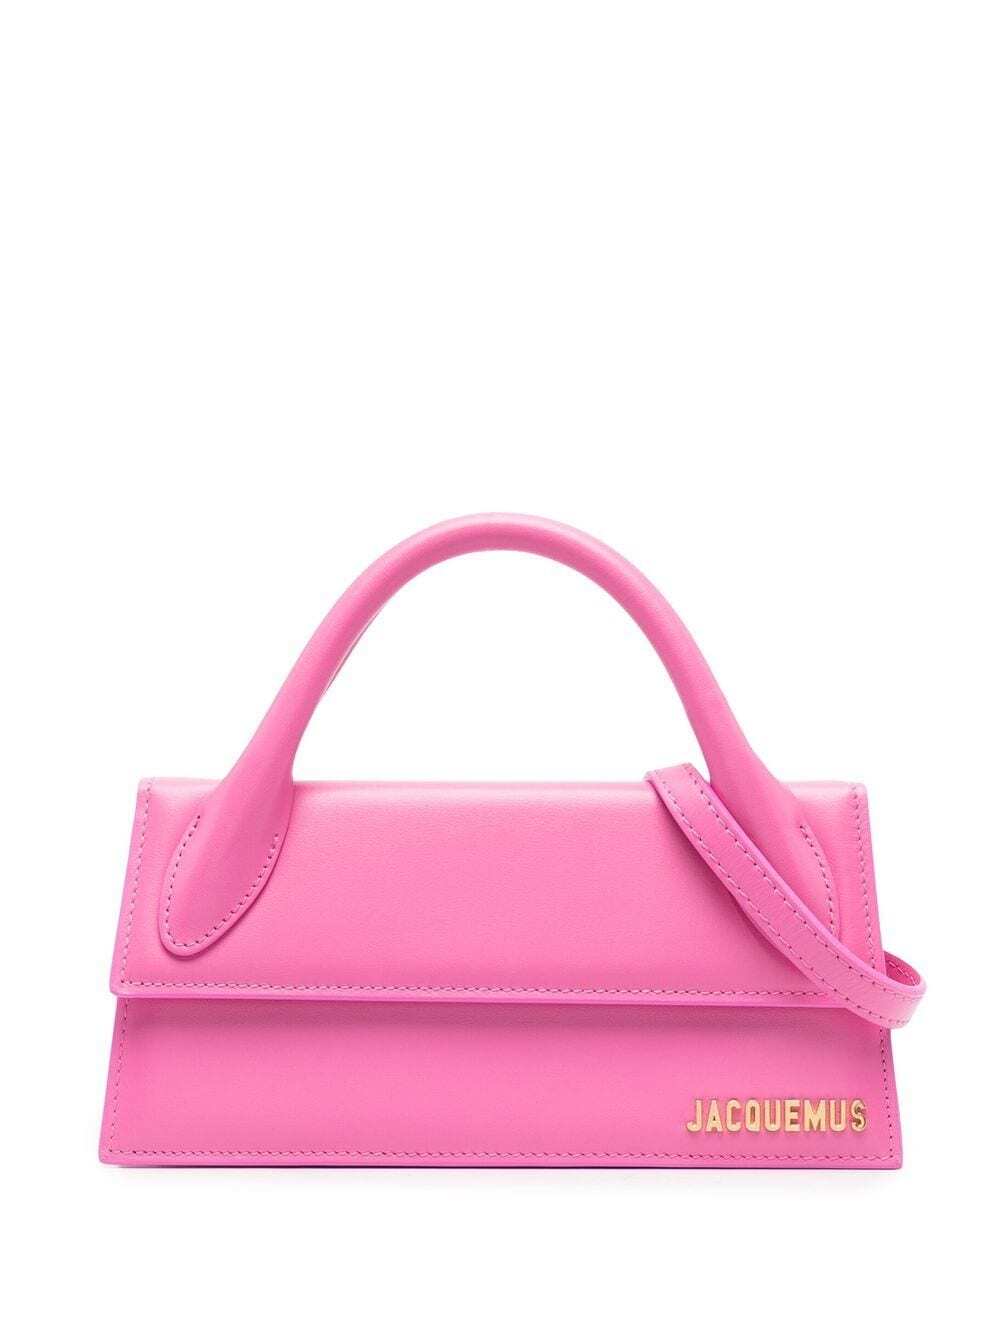 Jacquemus Le Chiquito long tote bag - Pink